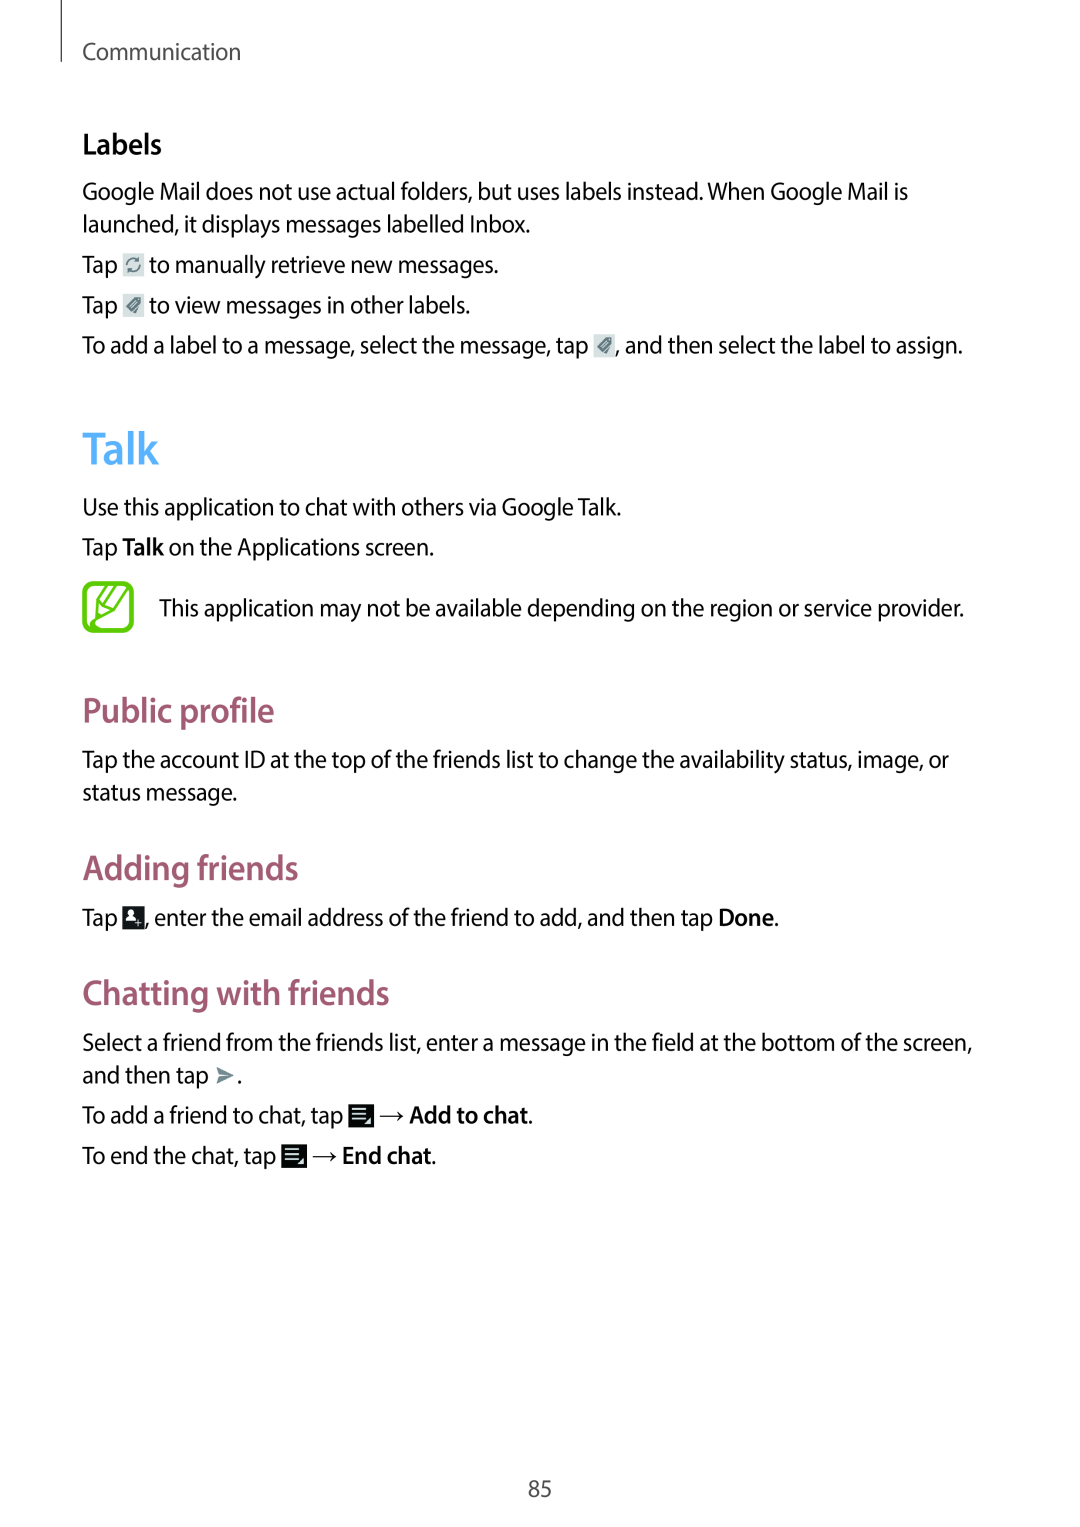 Samsung EK-GC100 user manual Talk, Public profile, Adding friends, Chatting with friends, Labels, Communication 